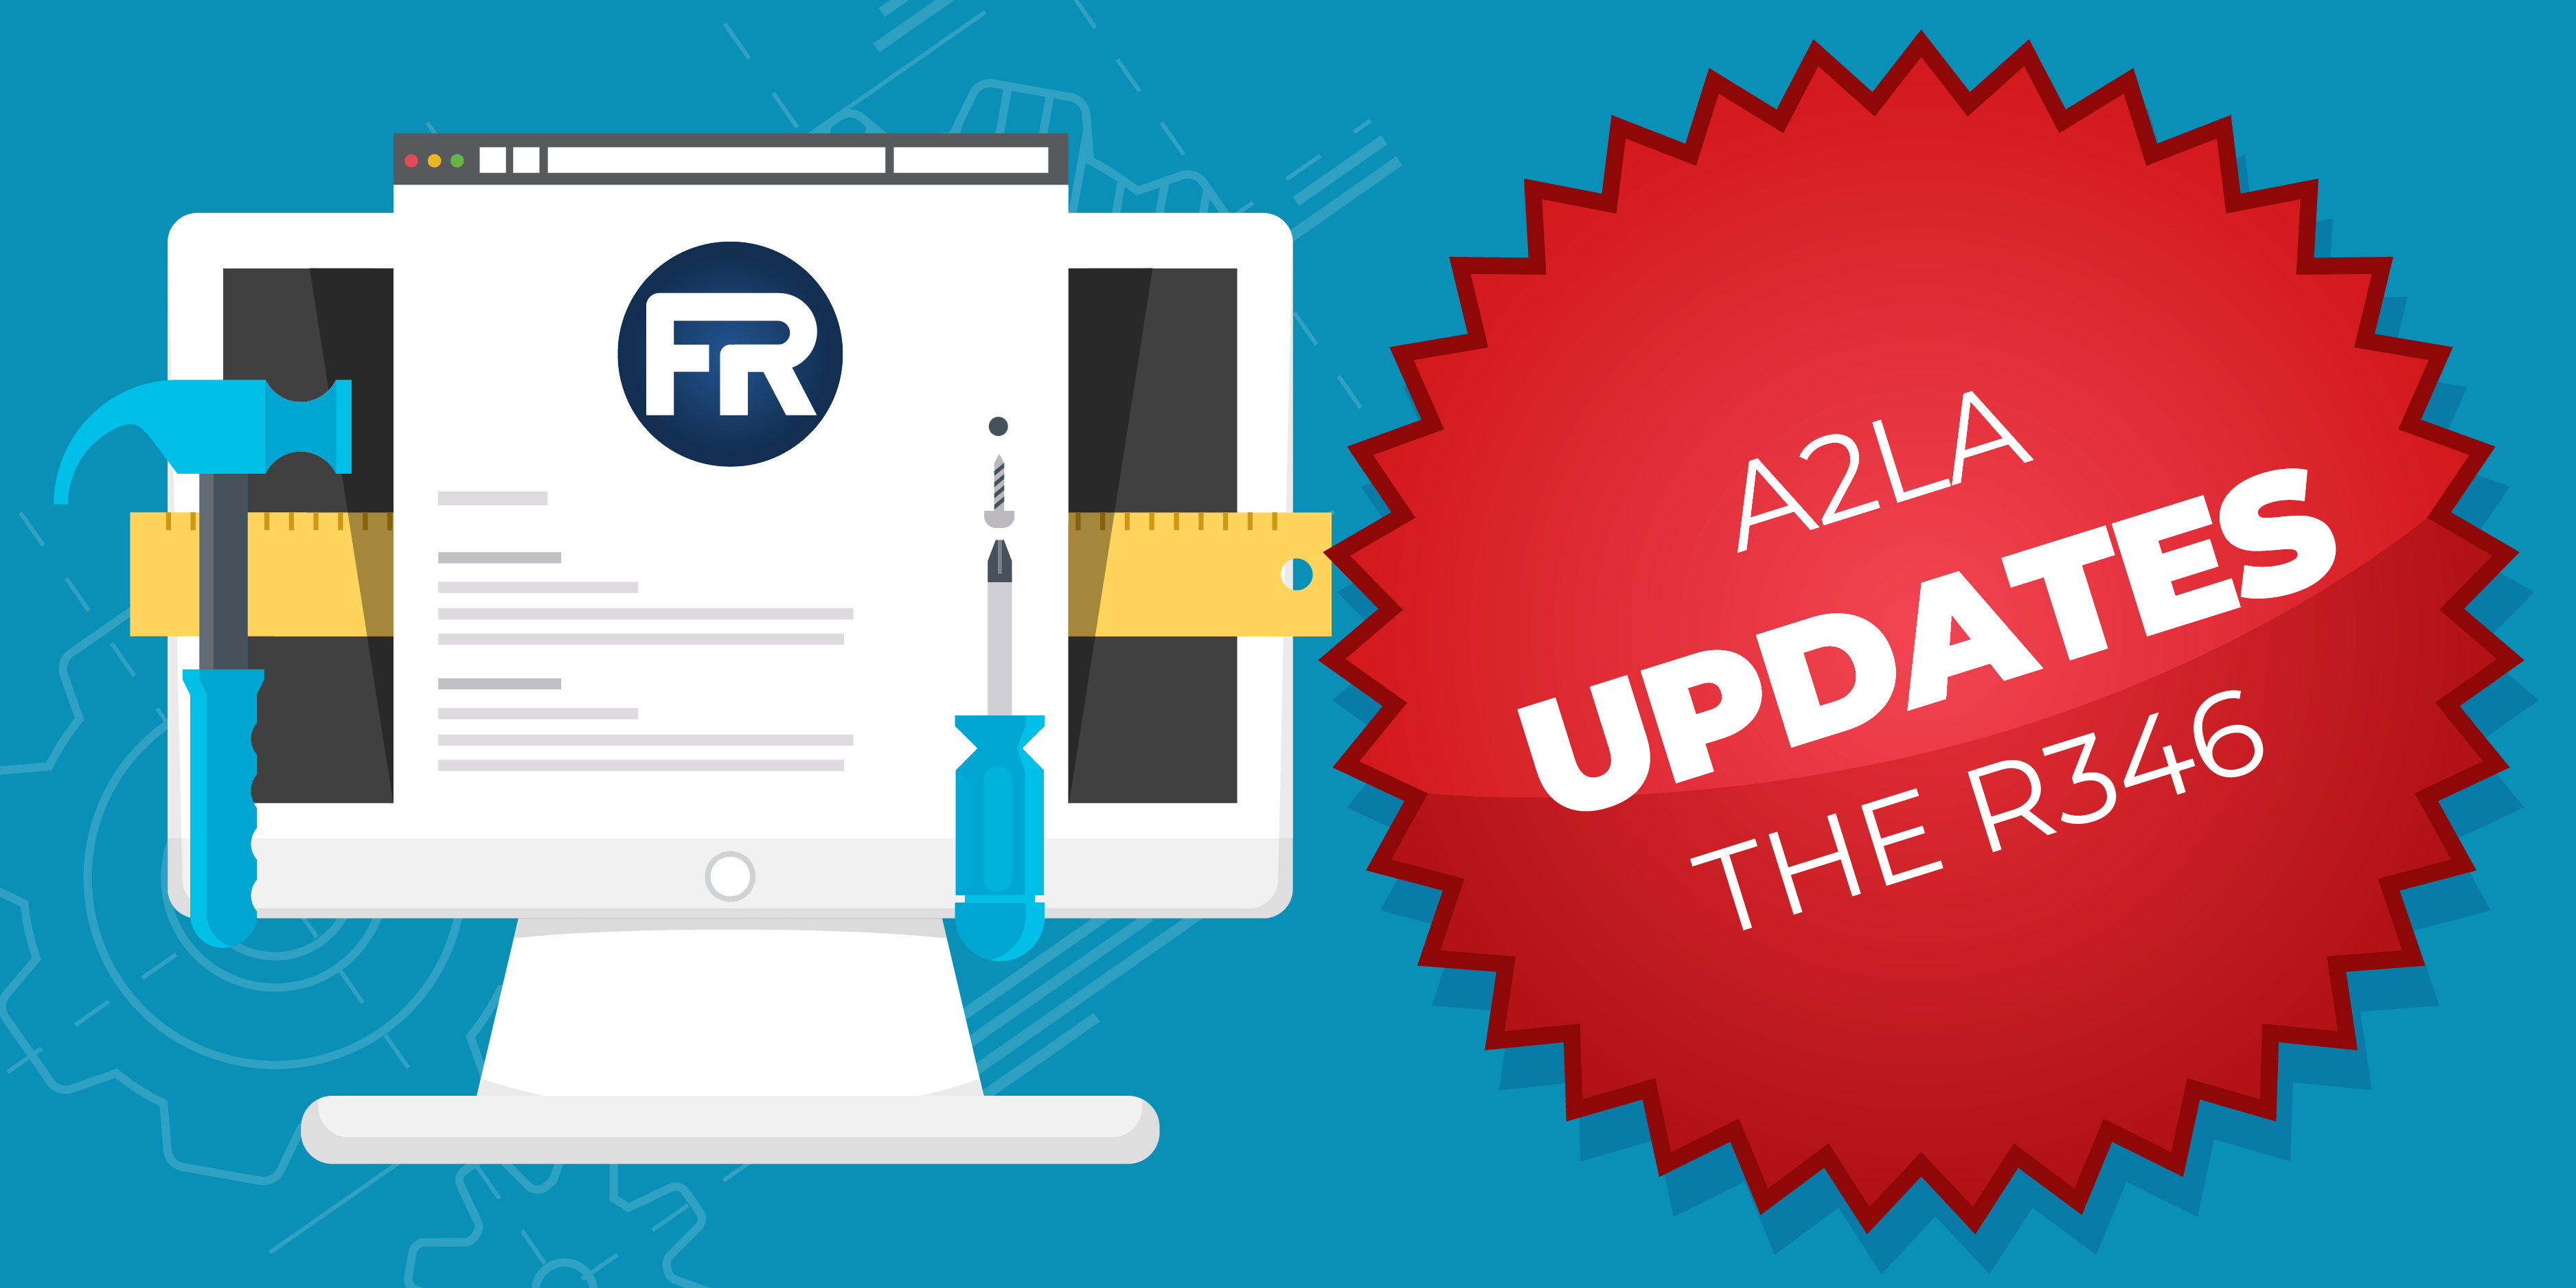 A2LA Updates the R346 Regarding Remote Baltimore Cyber Range Assessments